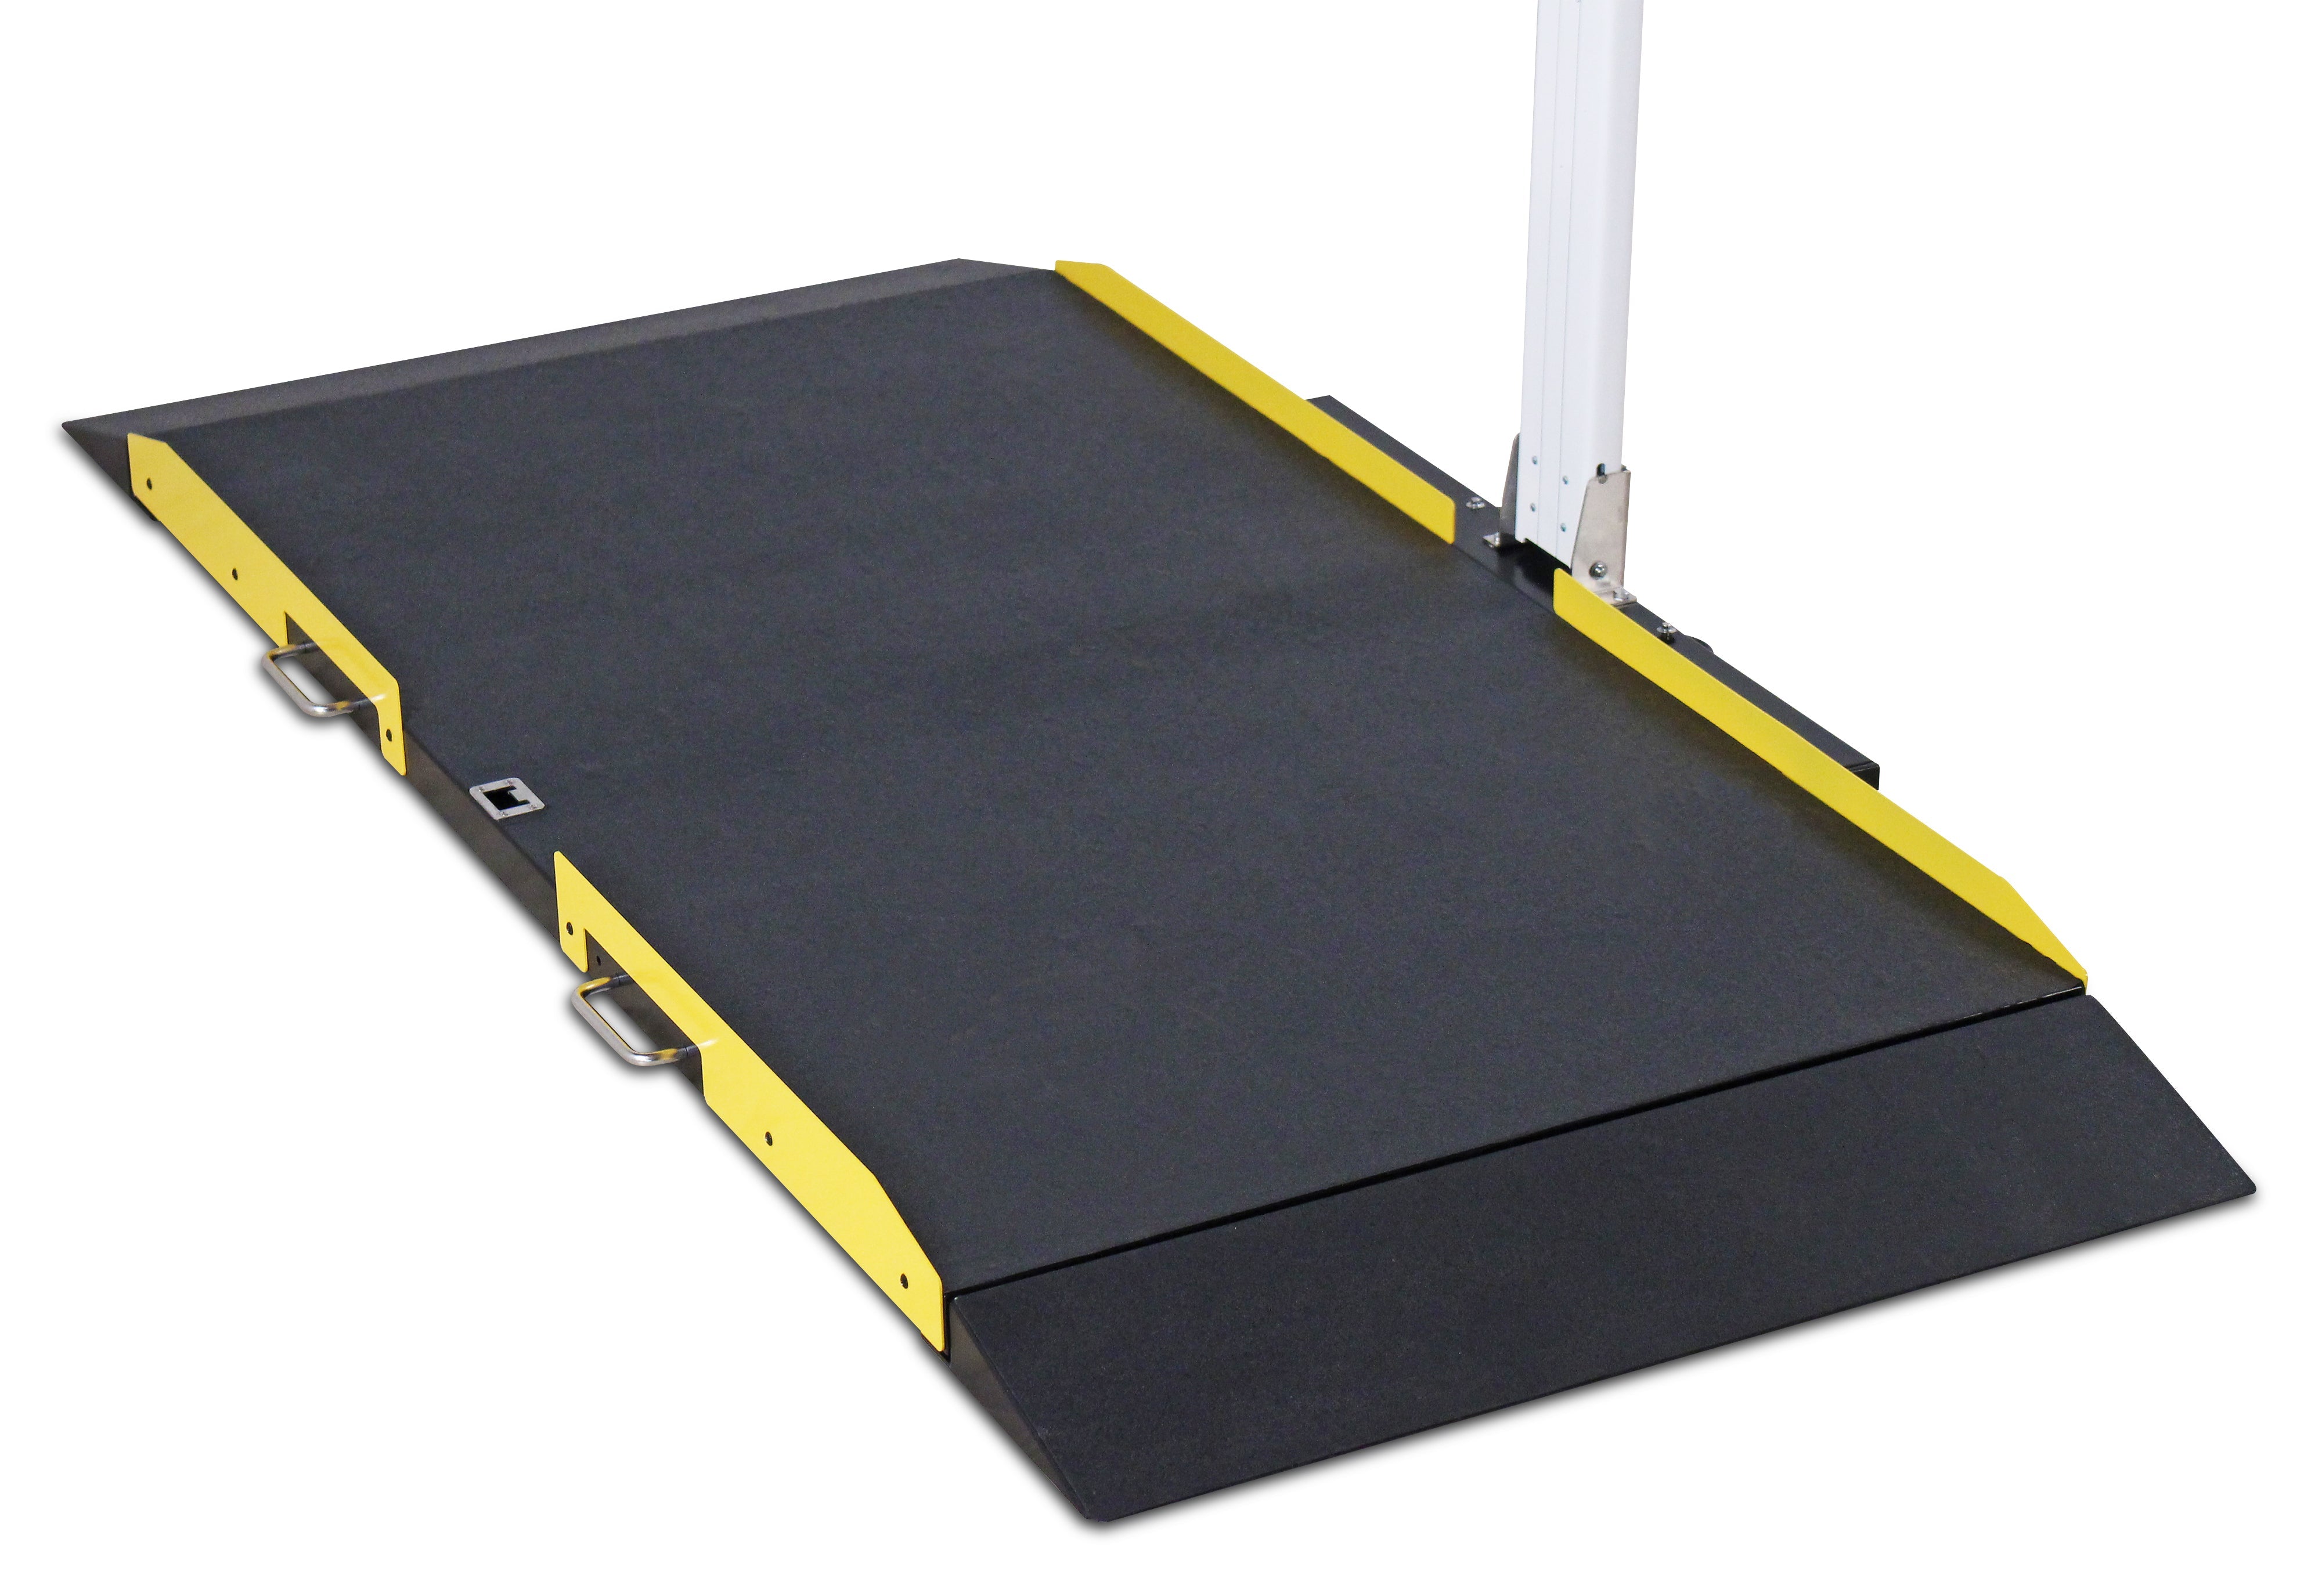 Detecto 8550-C-AC Stretcher Scale, Portable, Digital, Folding Col., 1,000lb x .2lb / 450kg x .1kg, BT/WiFi, AC Adapter